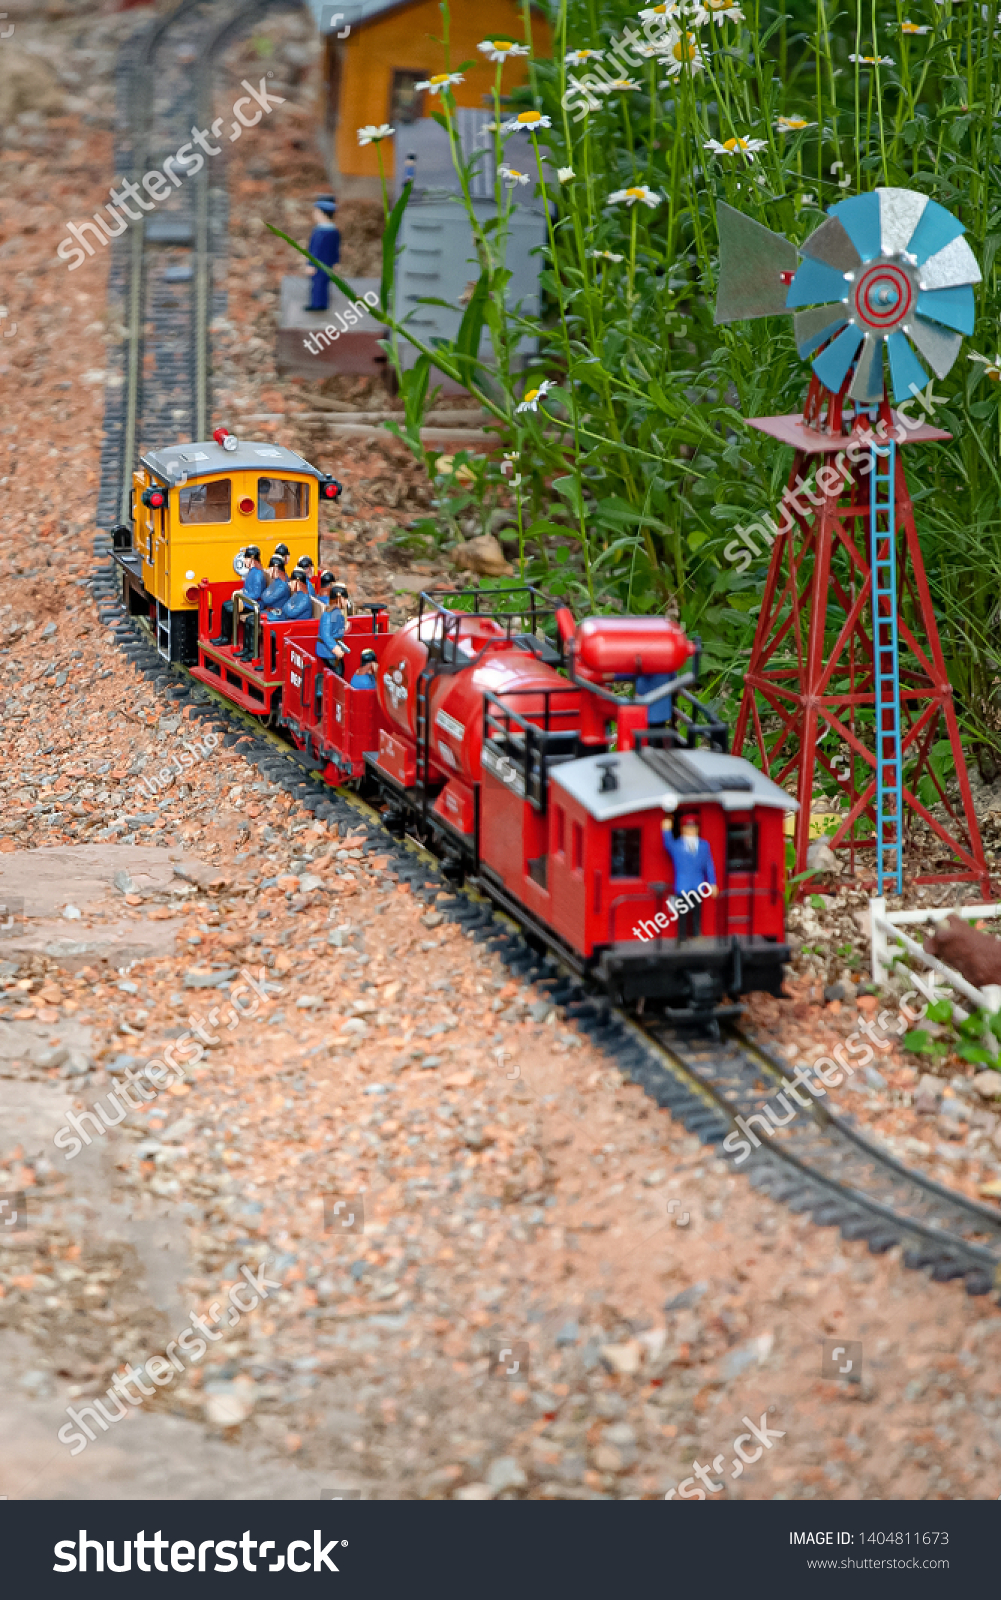 metal toy train